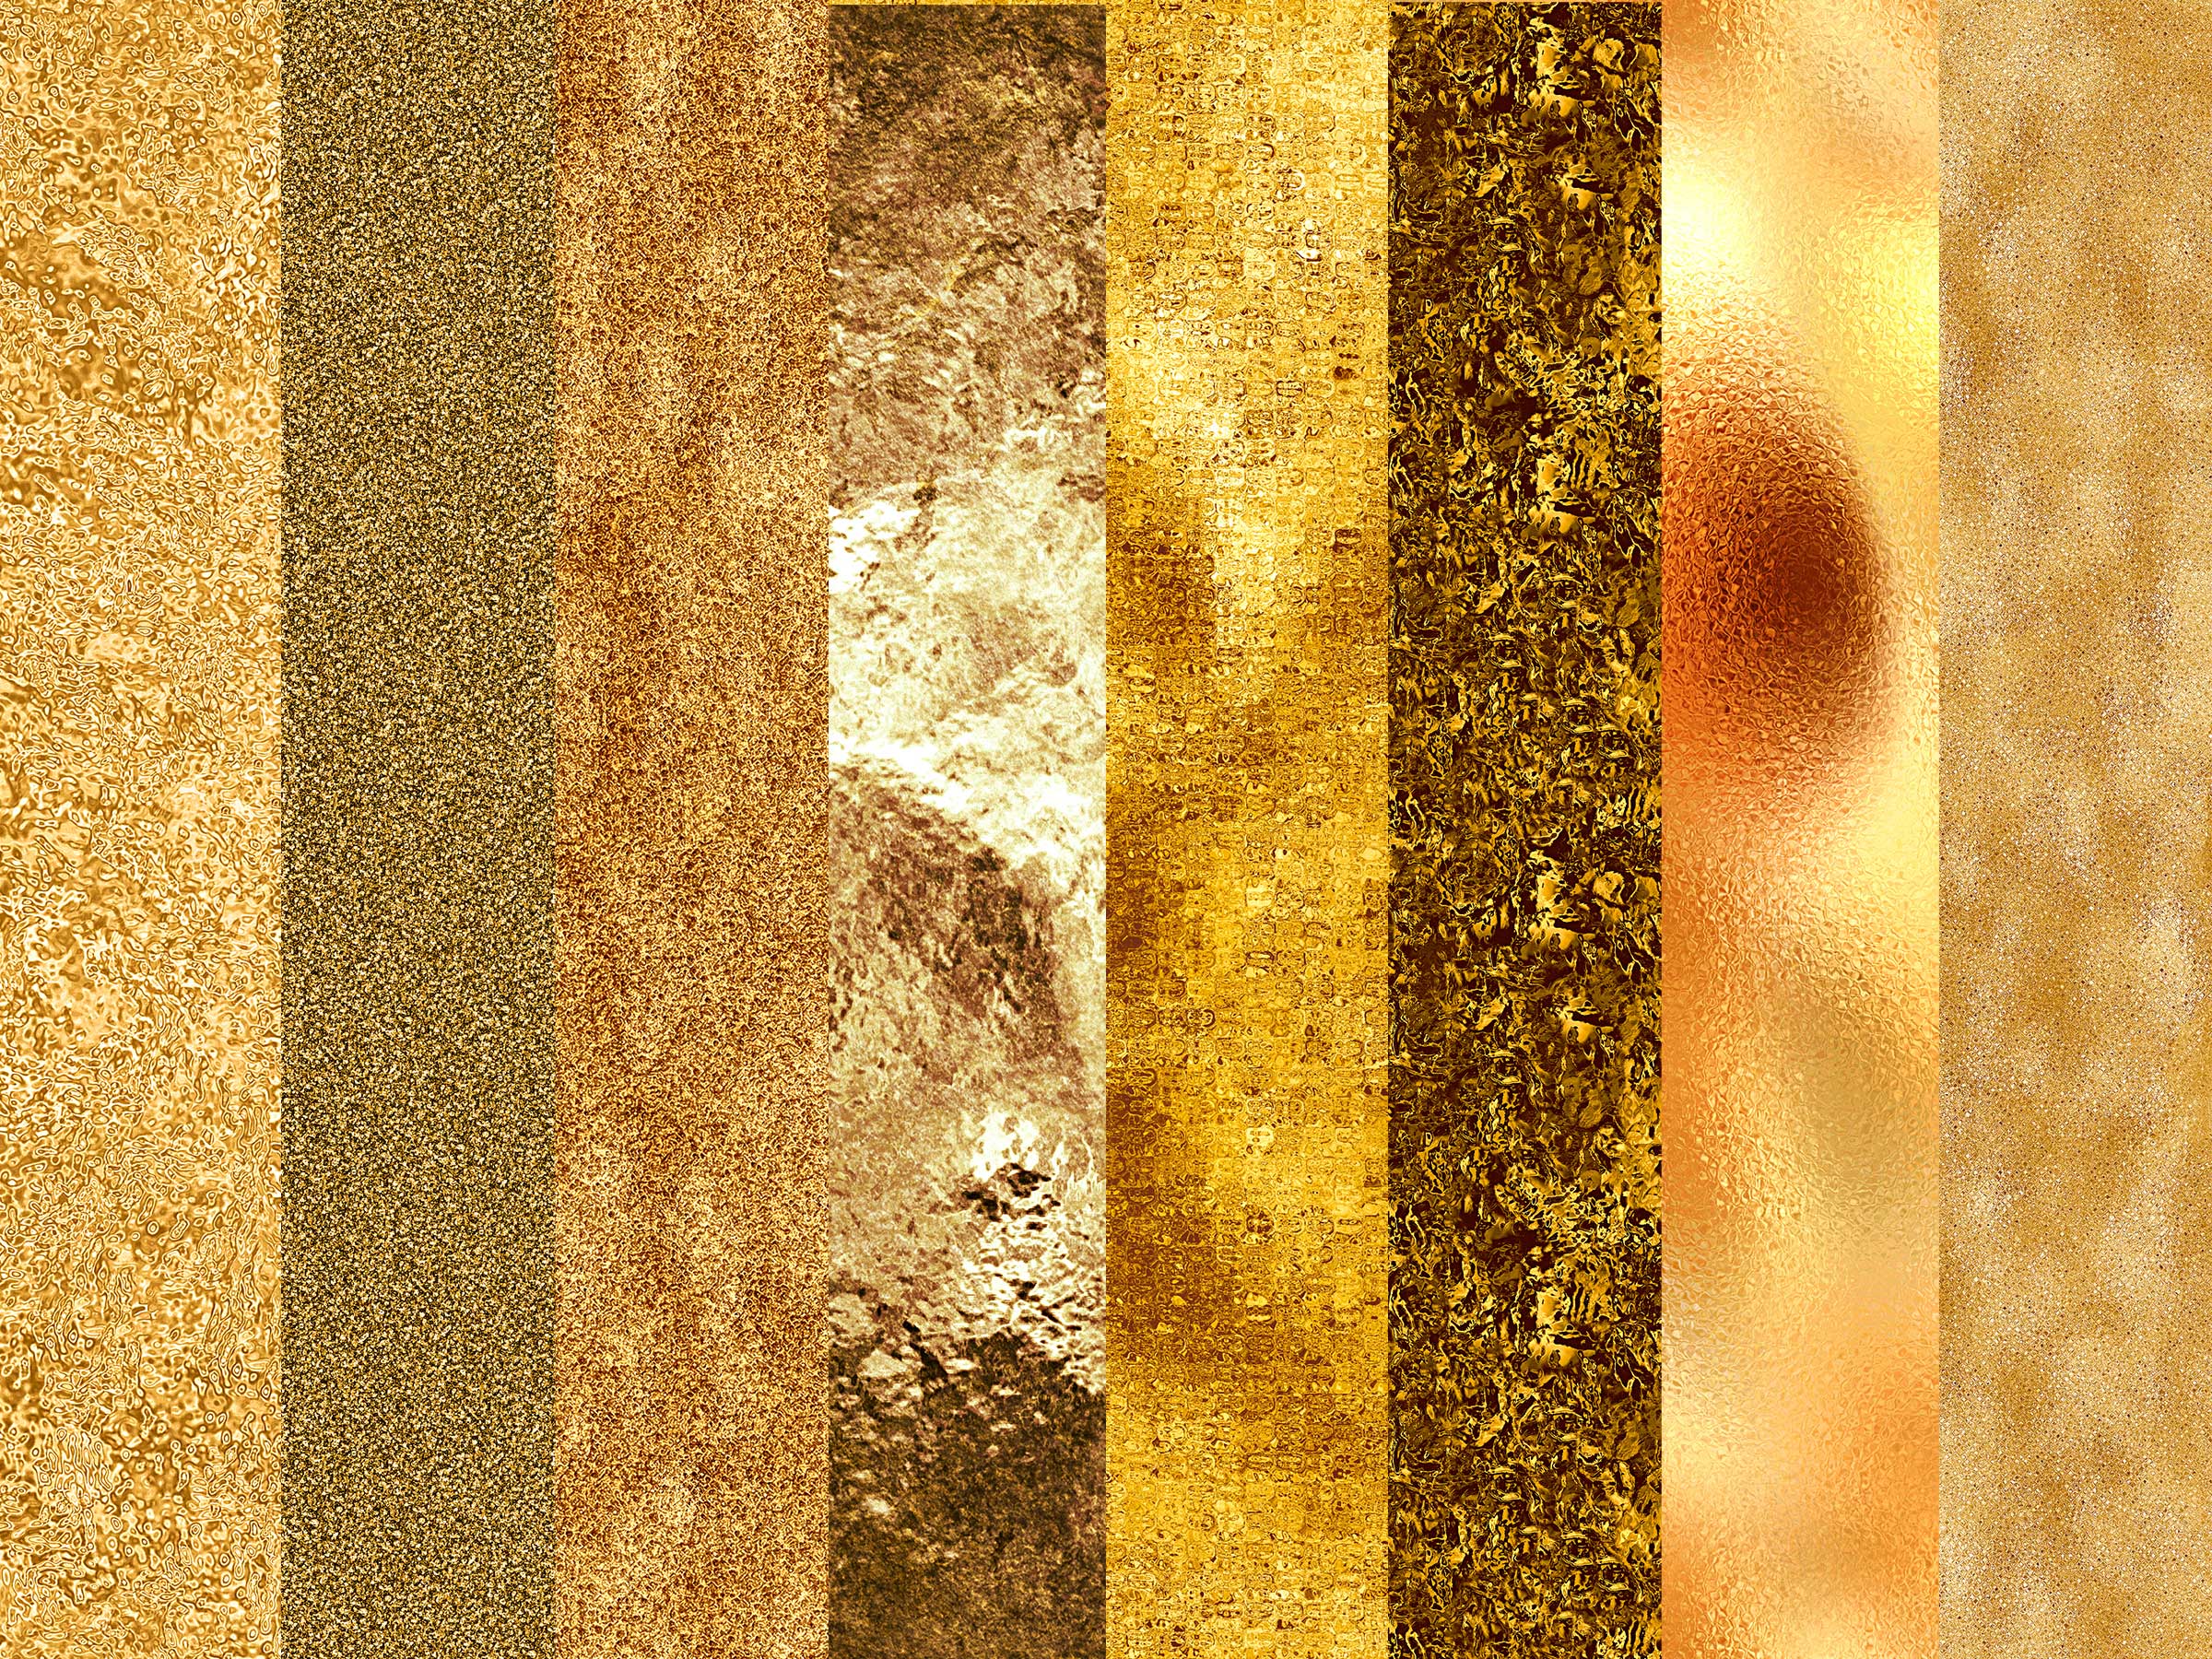 Gold Texture